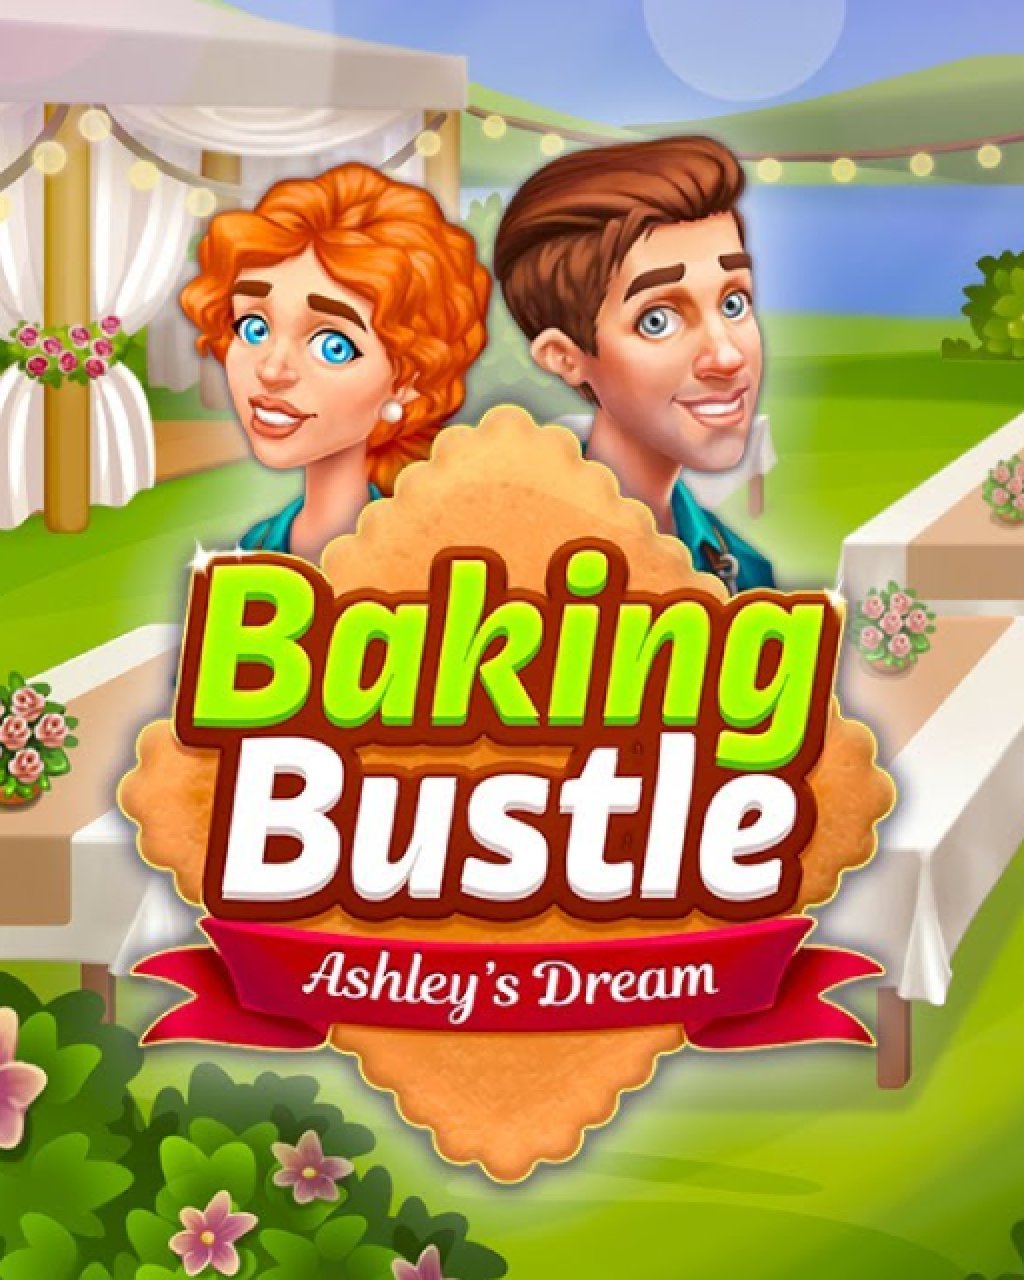 Baking Bustle Ashley’s Dream